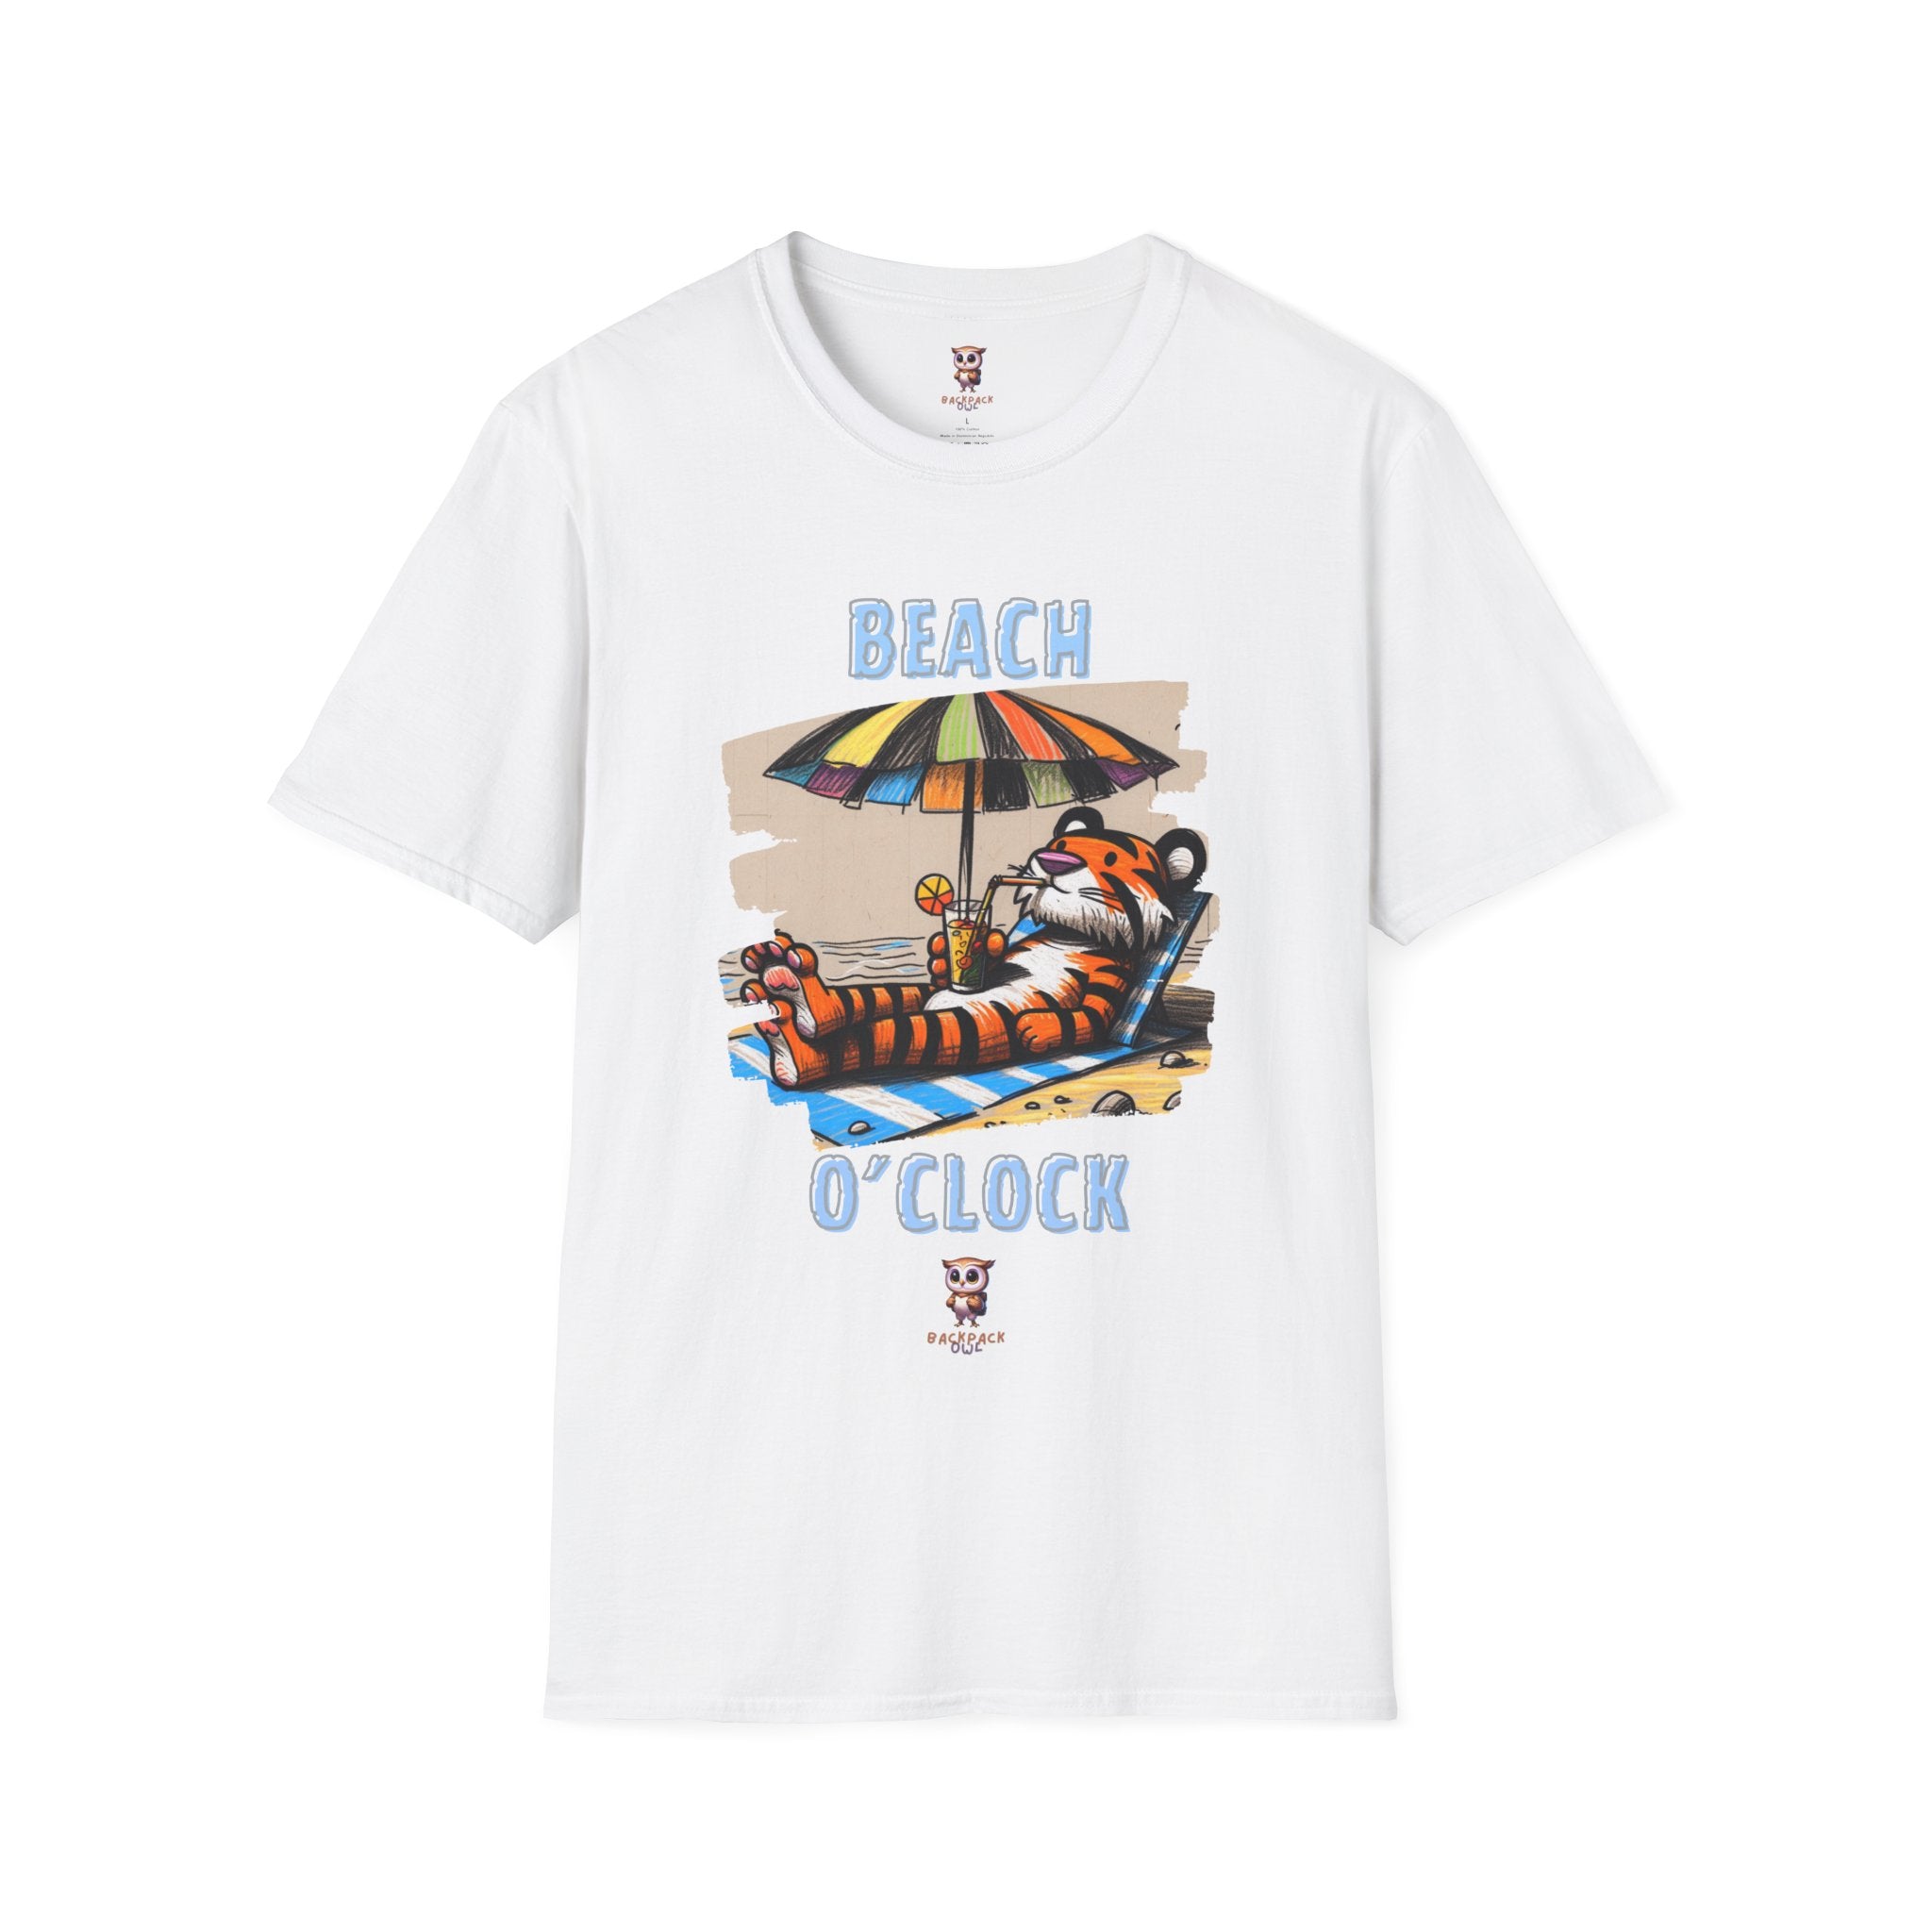 Beach O'Clock - Camiseta unisex de estilo suave